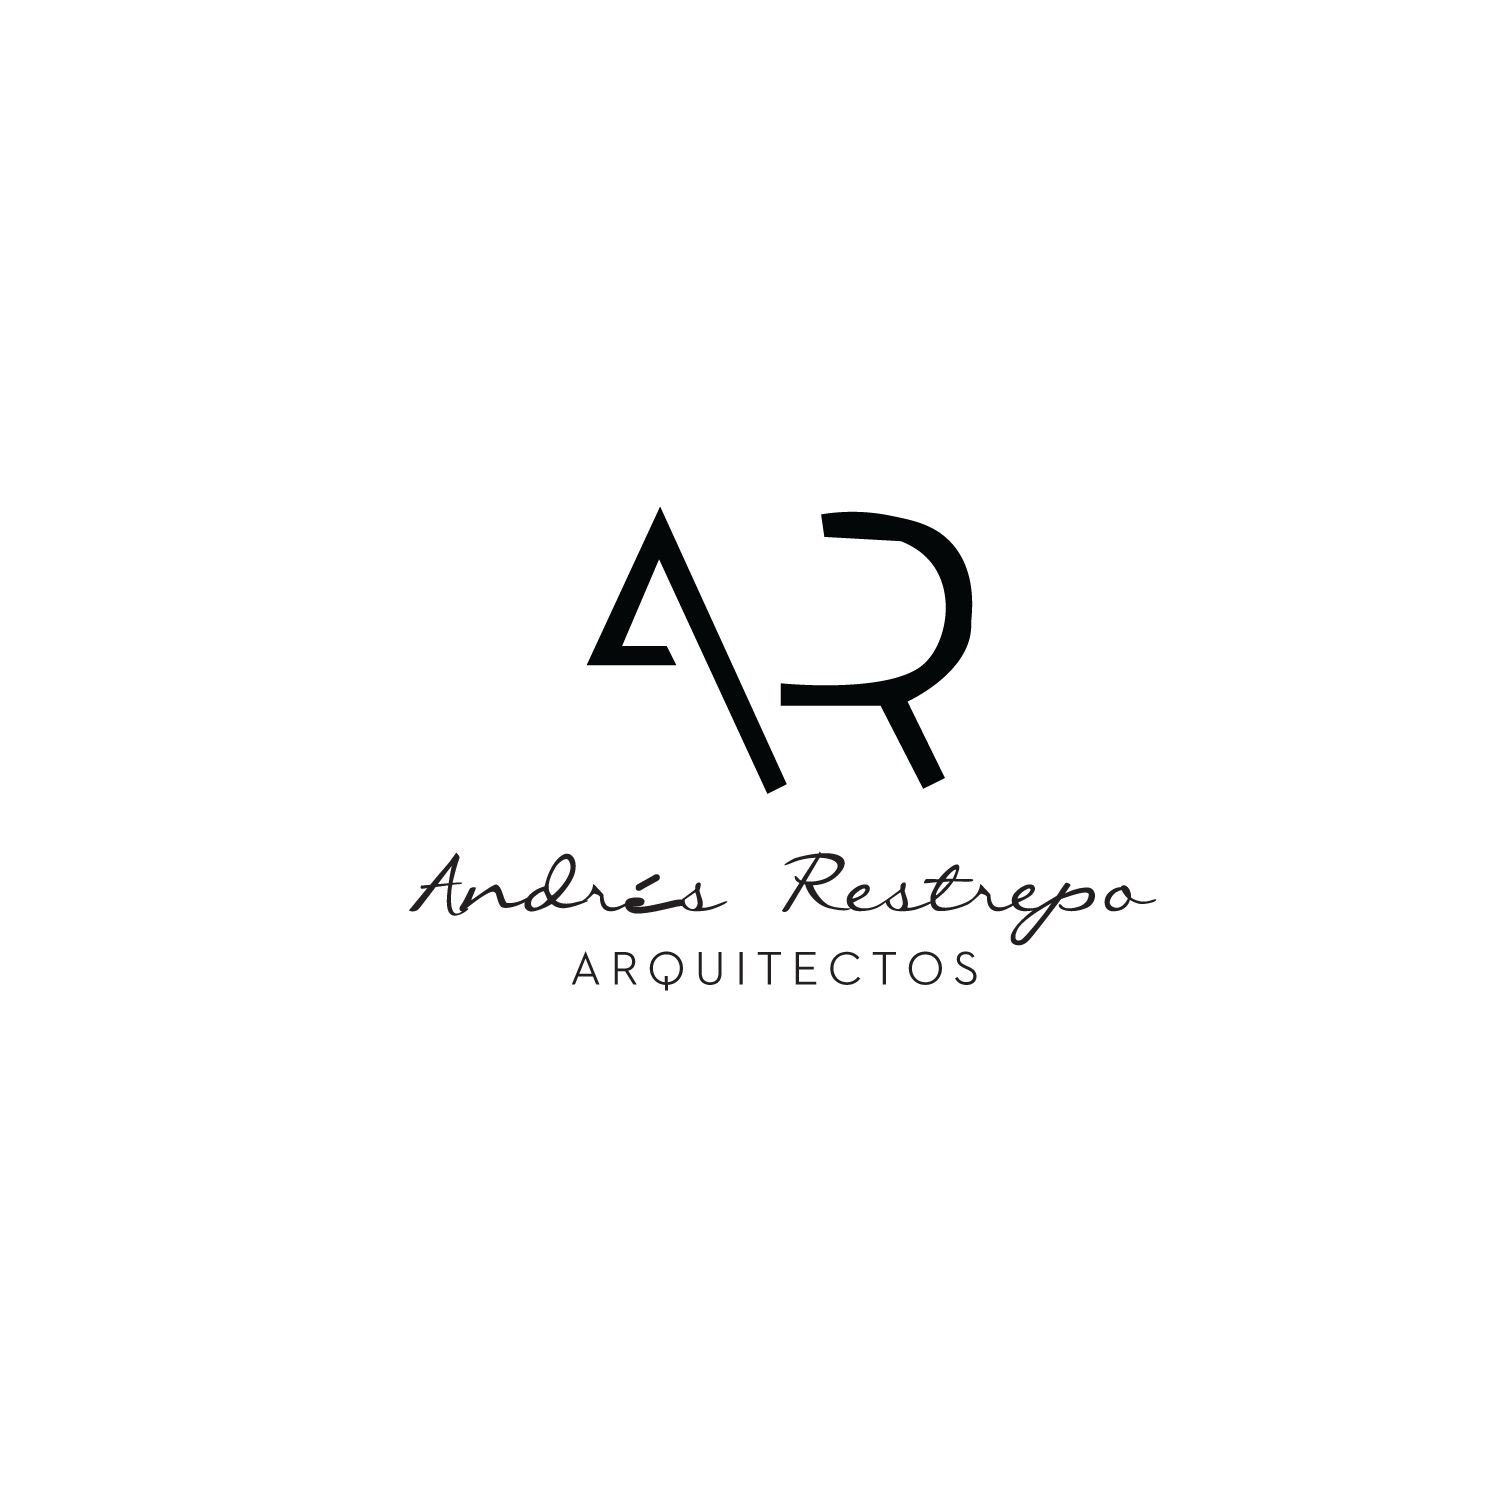 Architect Logo - Conservative, Serious, Architect Logo Design for Andrés Restrepo